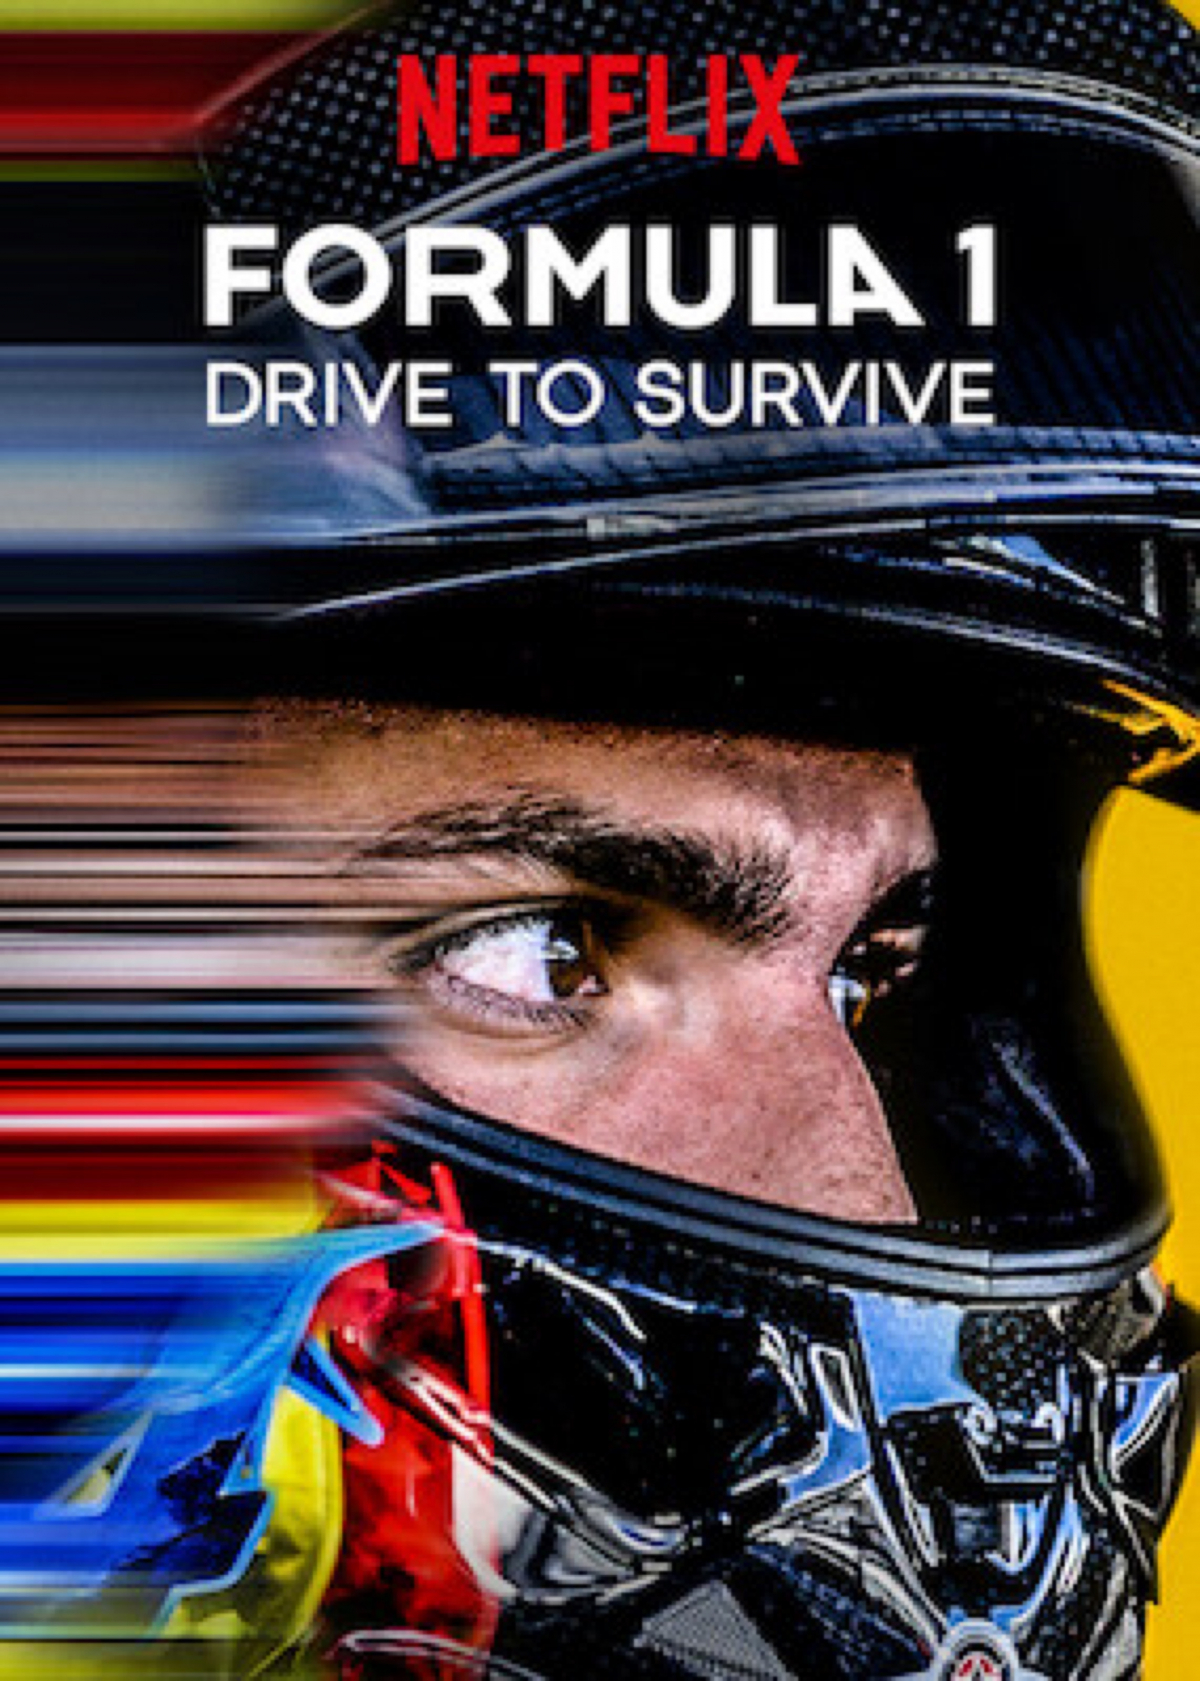 Formula 1: Drive To Survive Season 1 Episode 10 “Crossing the line"